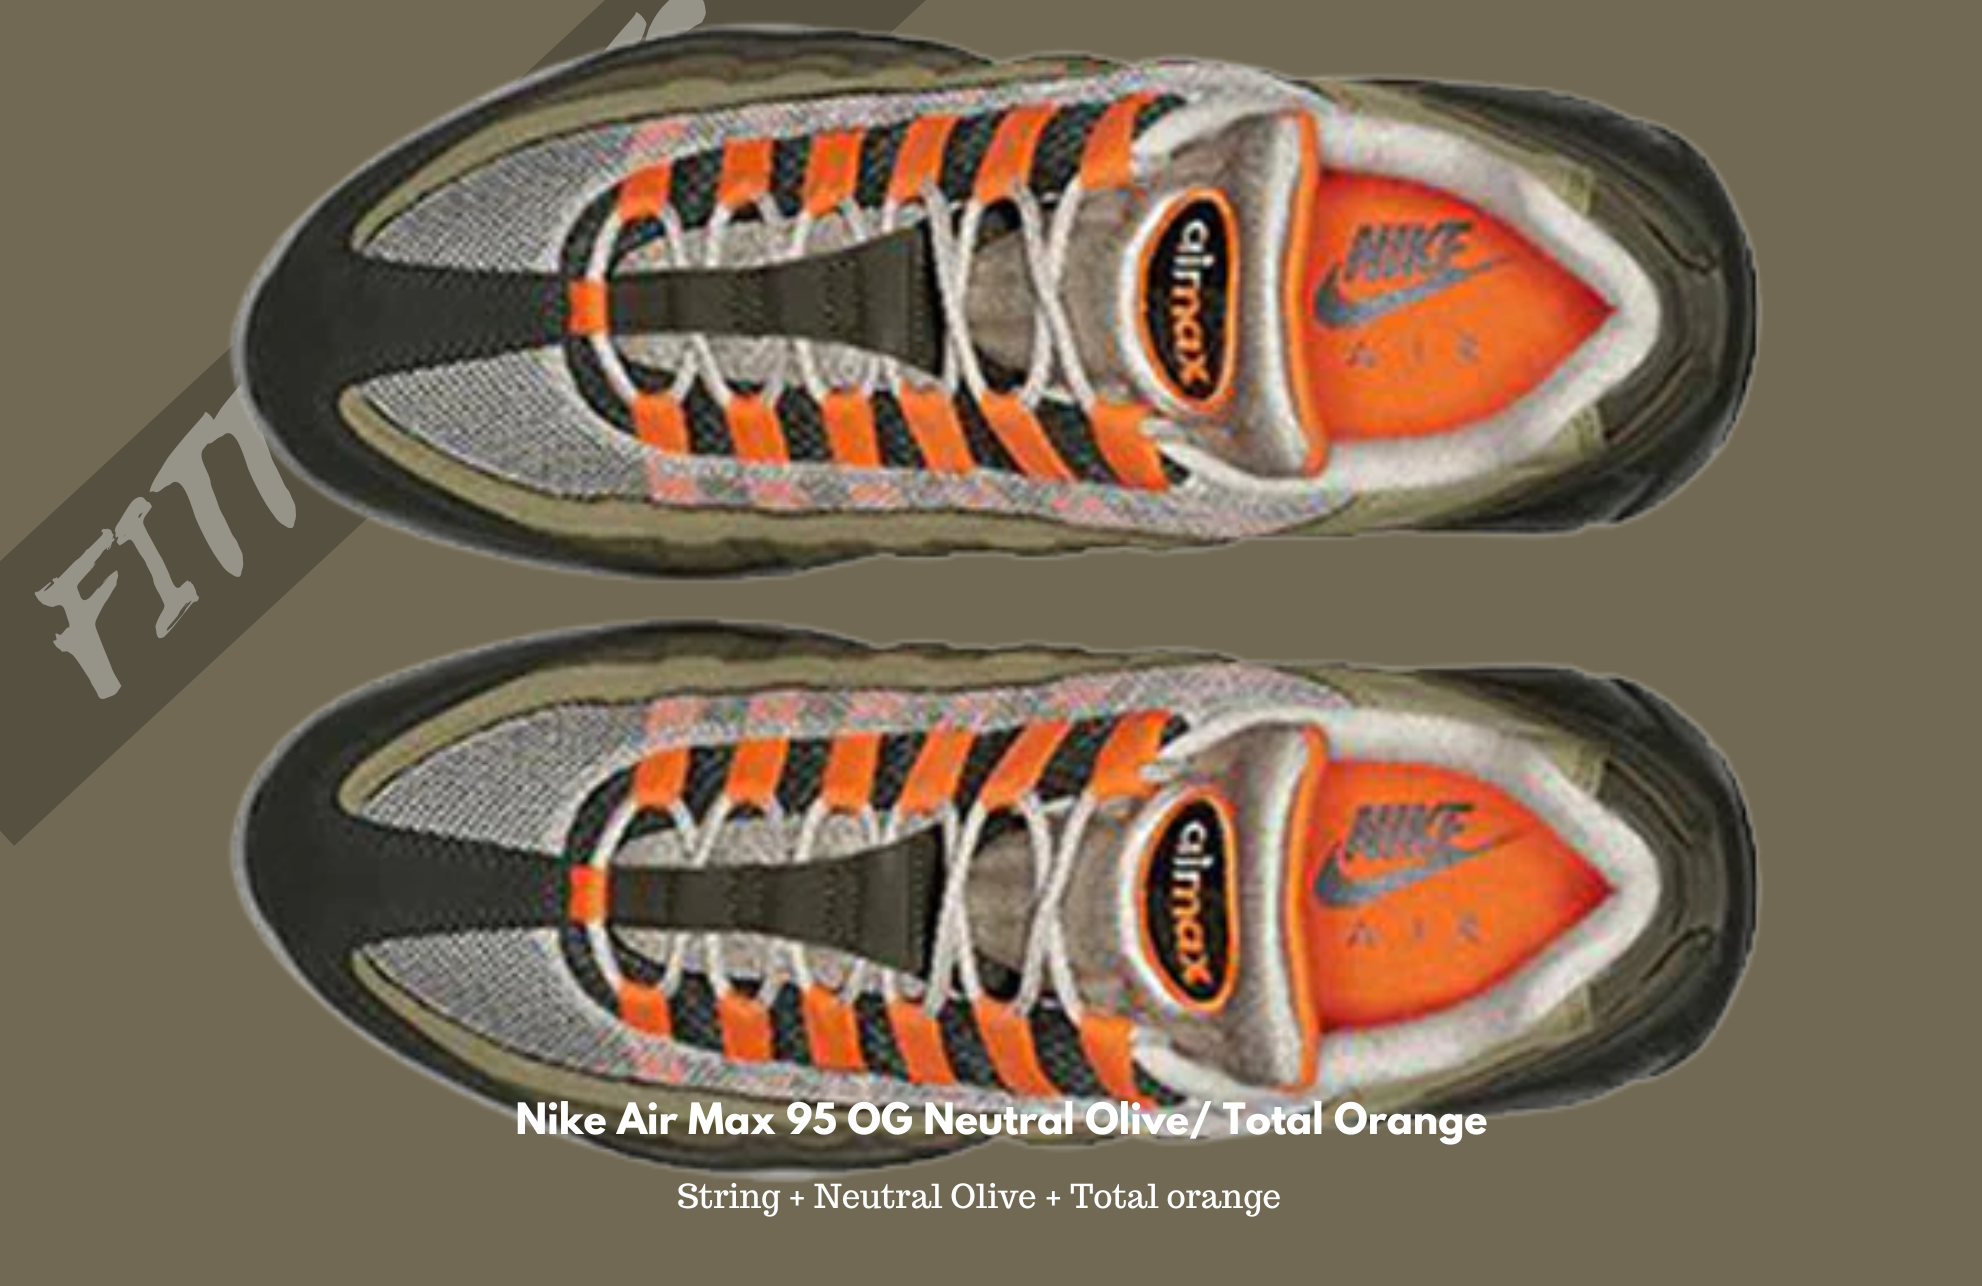 Nike Air Max 95 OG Neutral Olive/ Total Orange